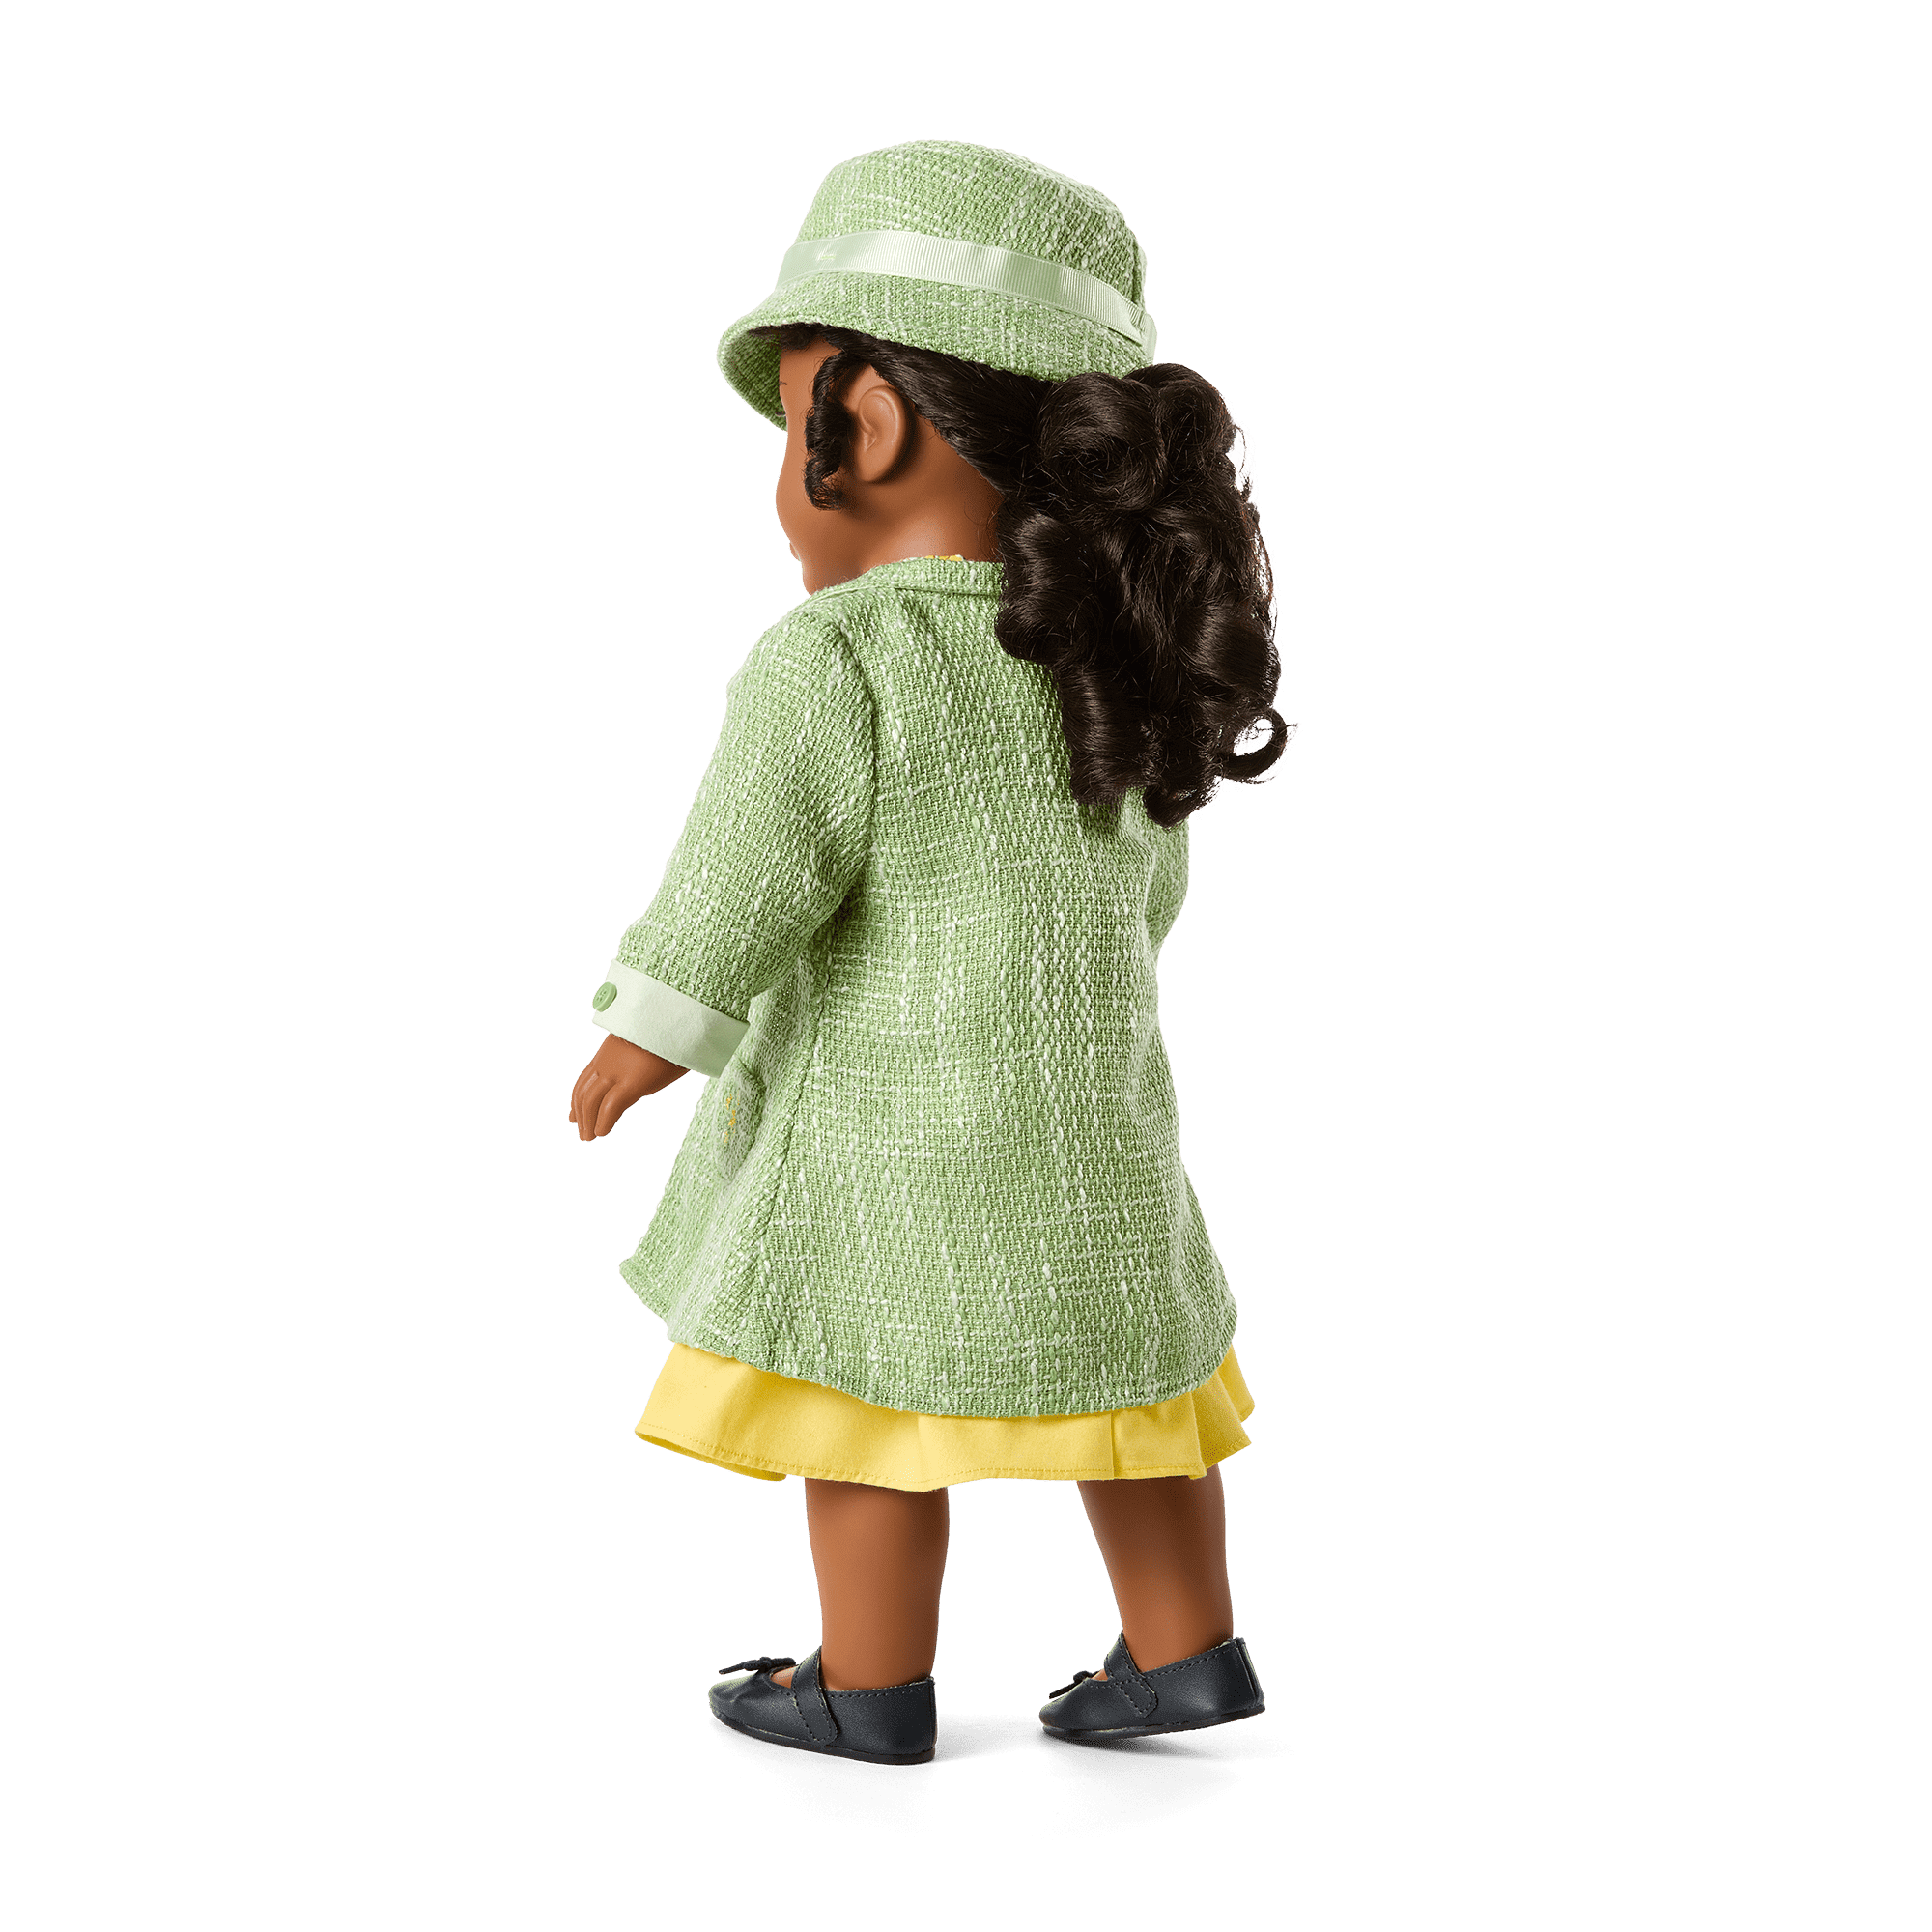 American Girl® Disney Princess Tiana Work Dress & Accessories for 18-inch Dolls